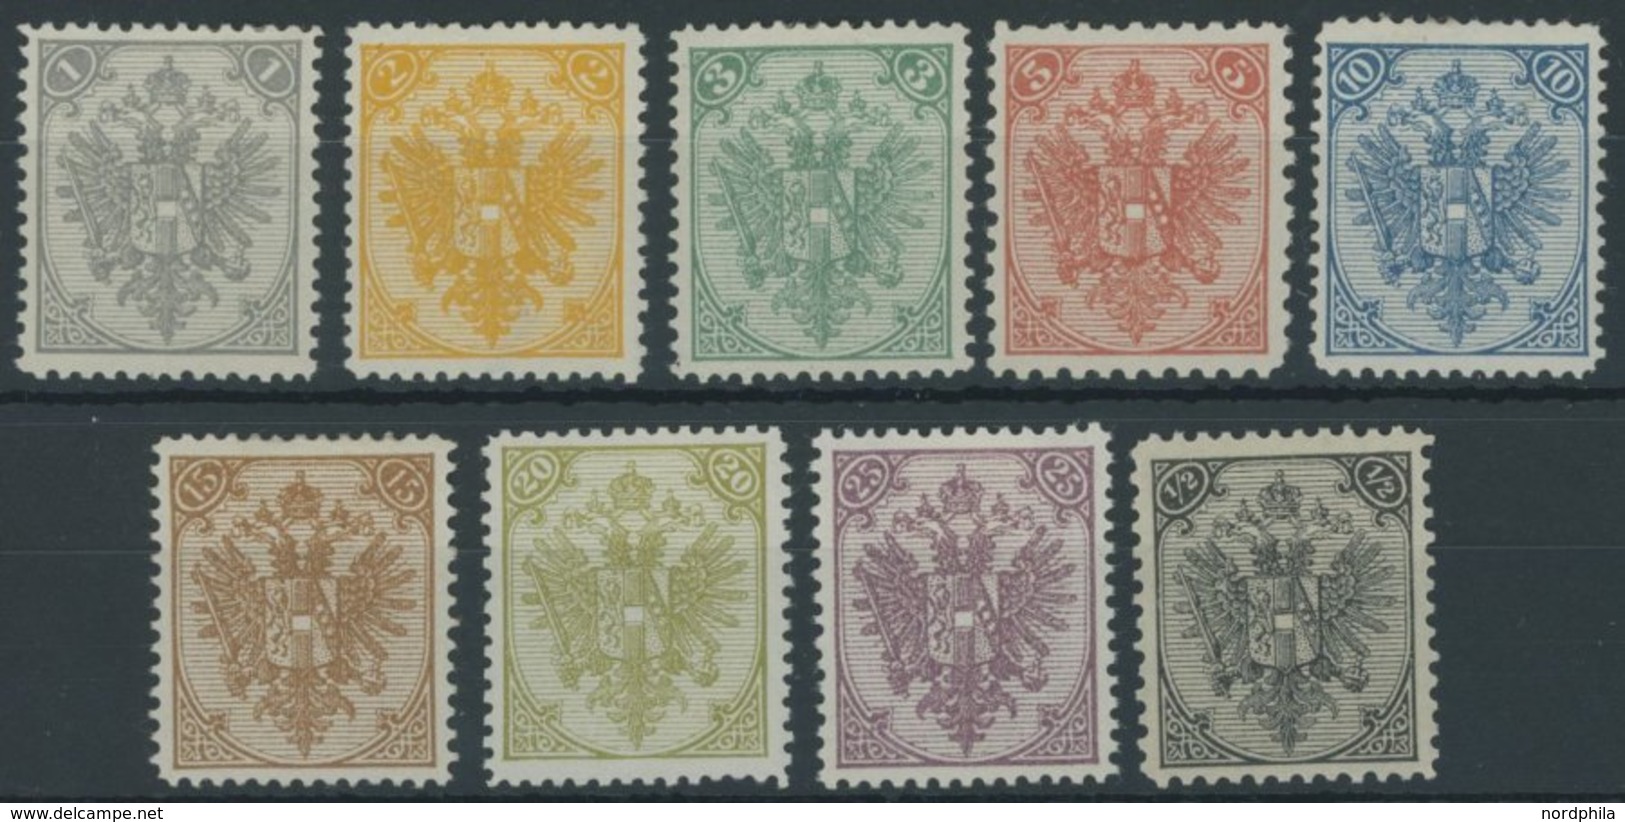 BOSNIEN UND HERZEGOWINA 1-9II *,** , 1895, Buchdruck, Prachtsatz - Bosnia And Herzegovina